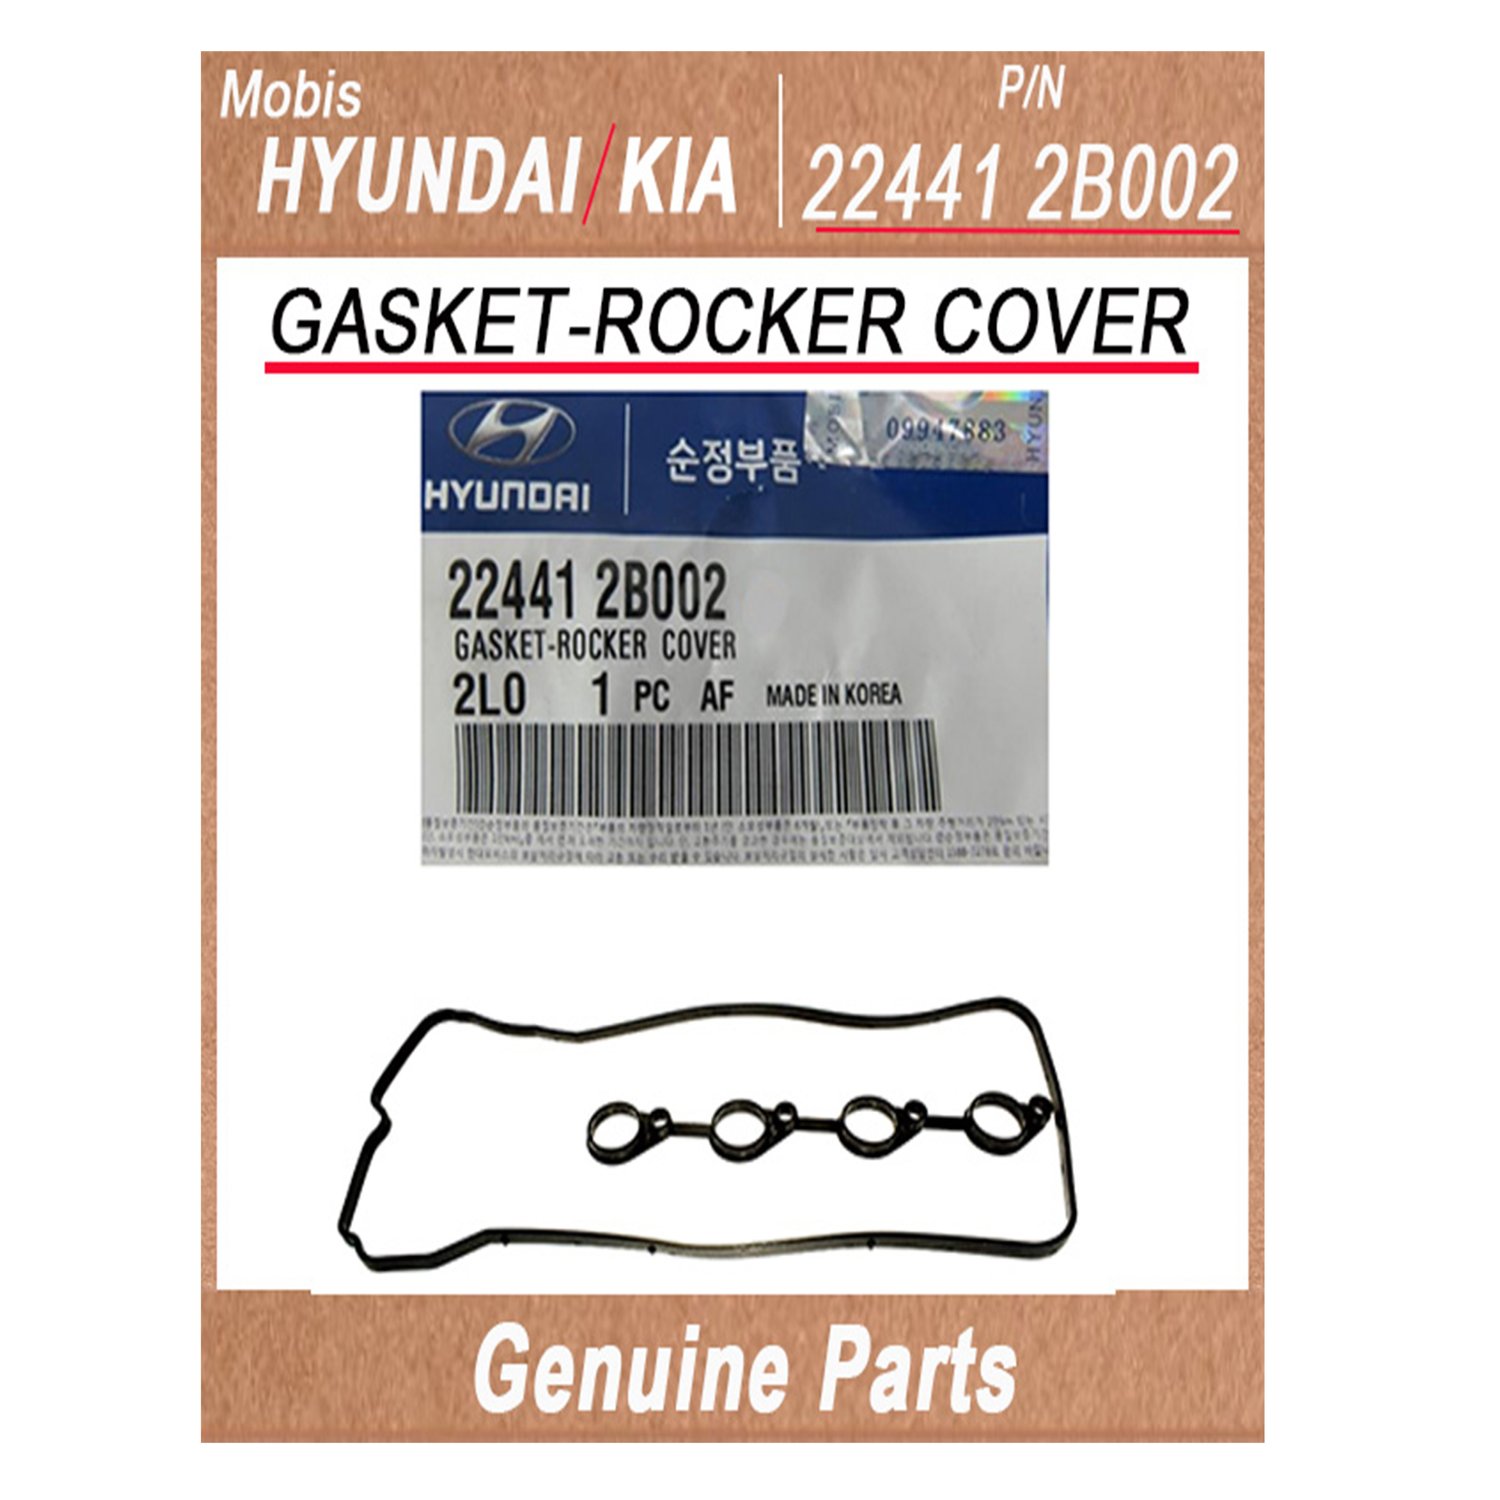 224412B002 _ GASKET_ROCKER COVER _ Genuine Korean Automotive Spare Parts _ Hyundai Kia _Mobis_